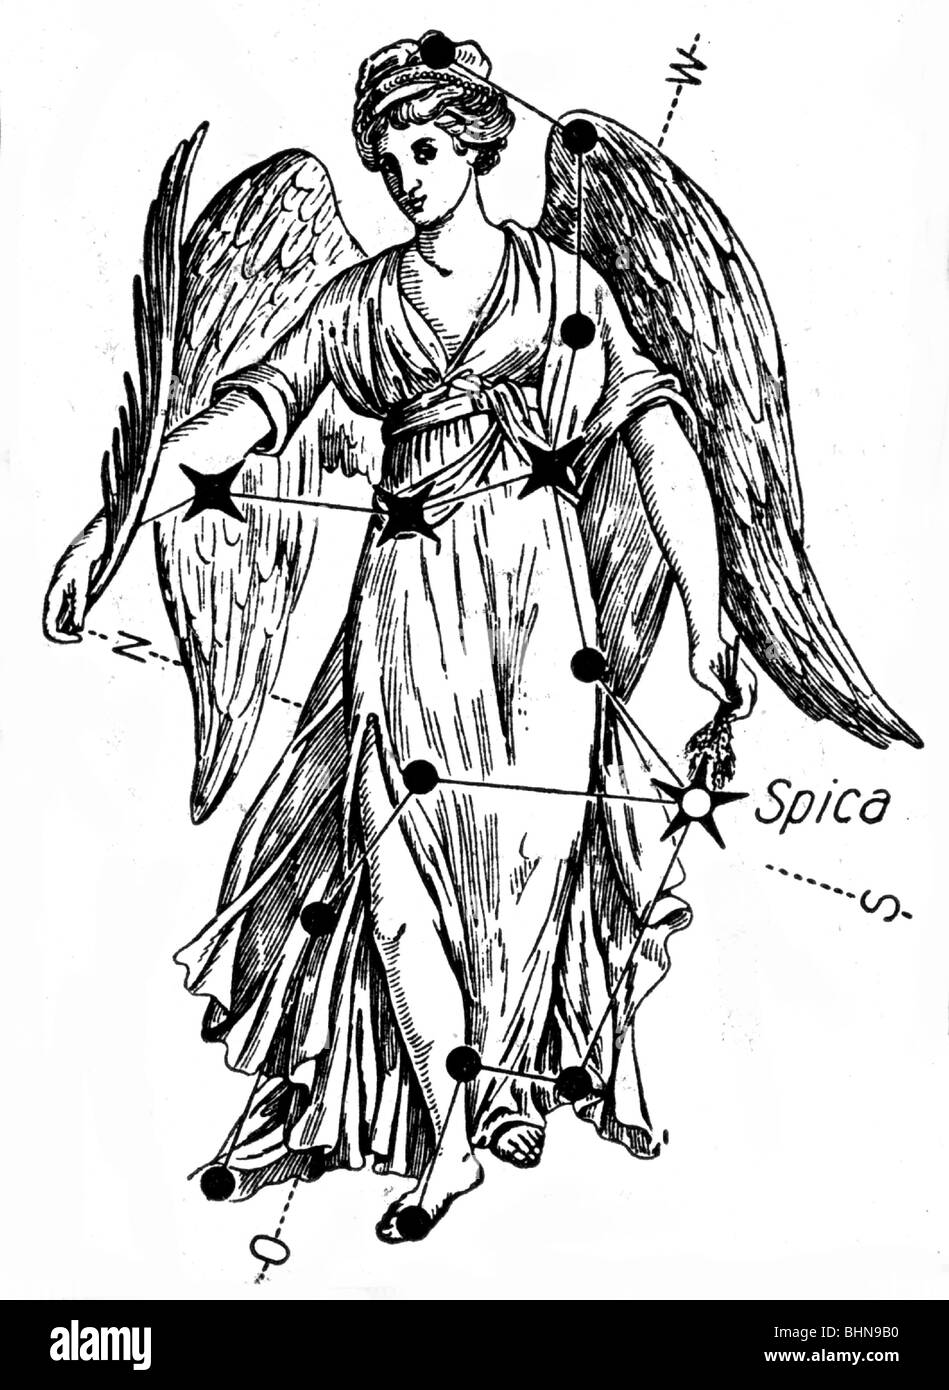 astrology, zodiac, sign of zodiac: Virgo, the Virgin, Uranographia, 1801, Stock Photo